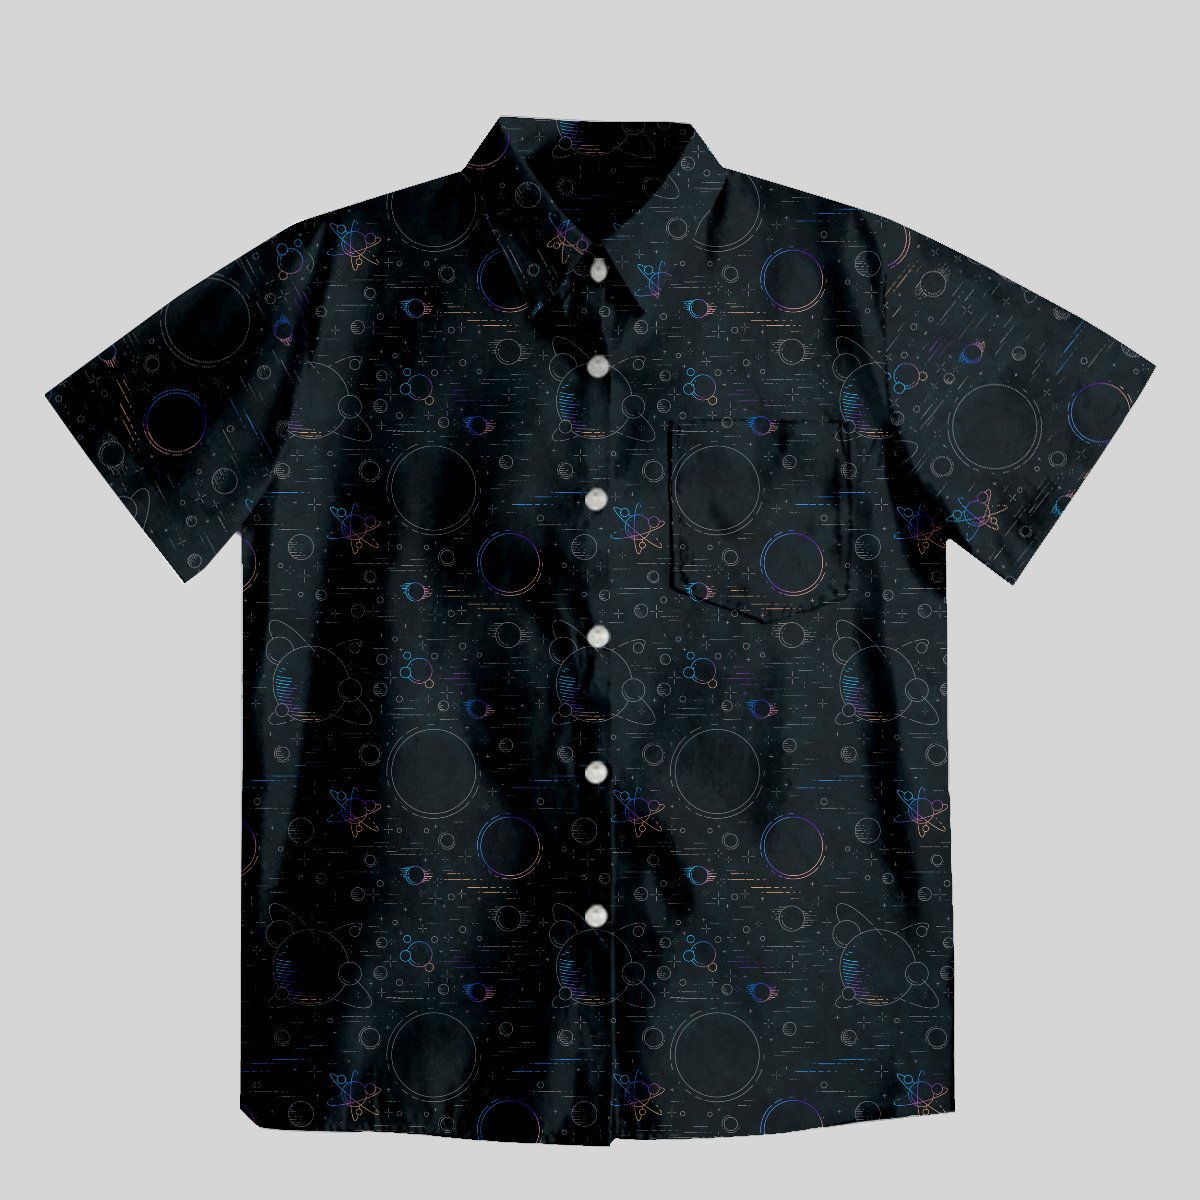 Colorful planet Button Up Pocket Shirt - Geeksoutfit